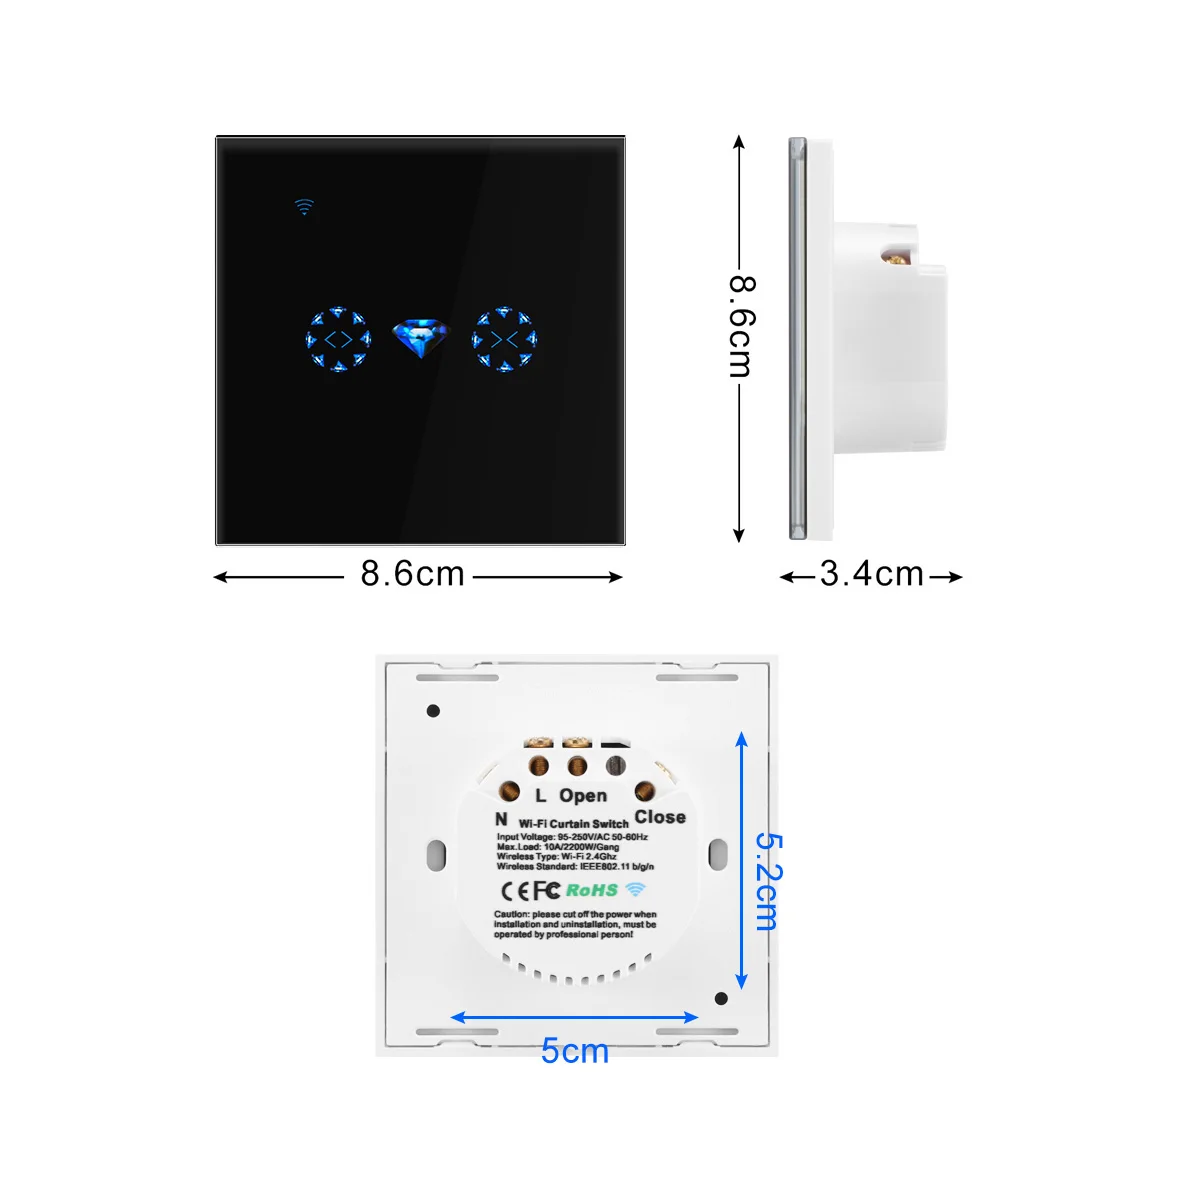 Wi-Fi Curtain Shutter Motor Door Smart Switch Upgrade Control Surface working with Amazon Alexa/Echo, Google Home